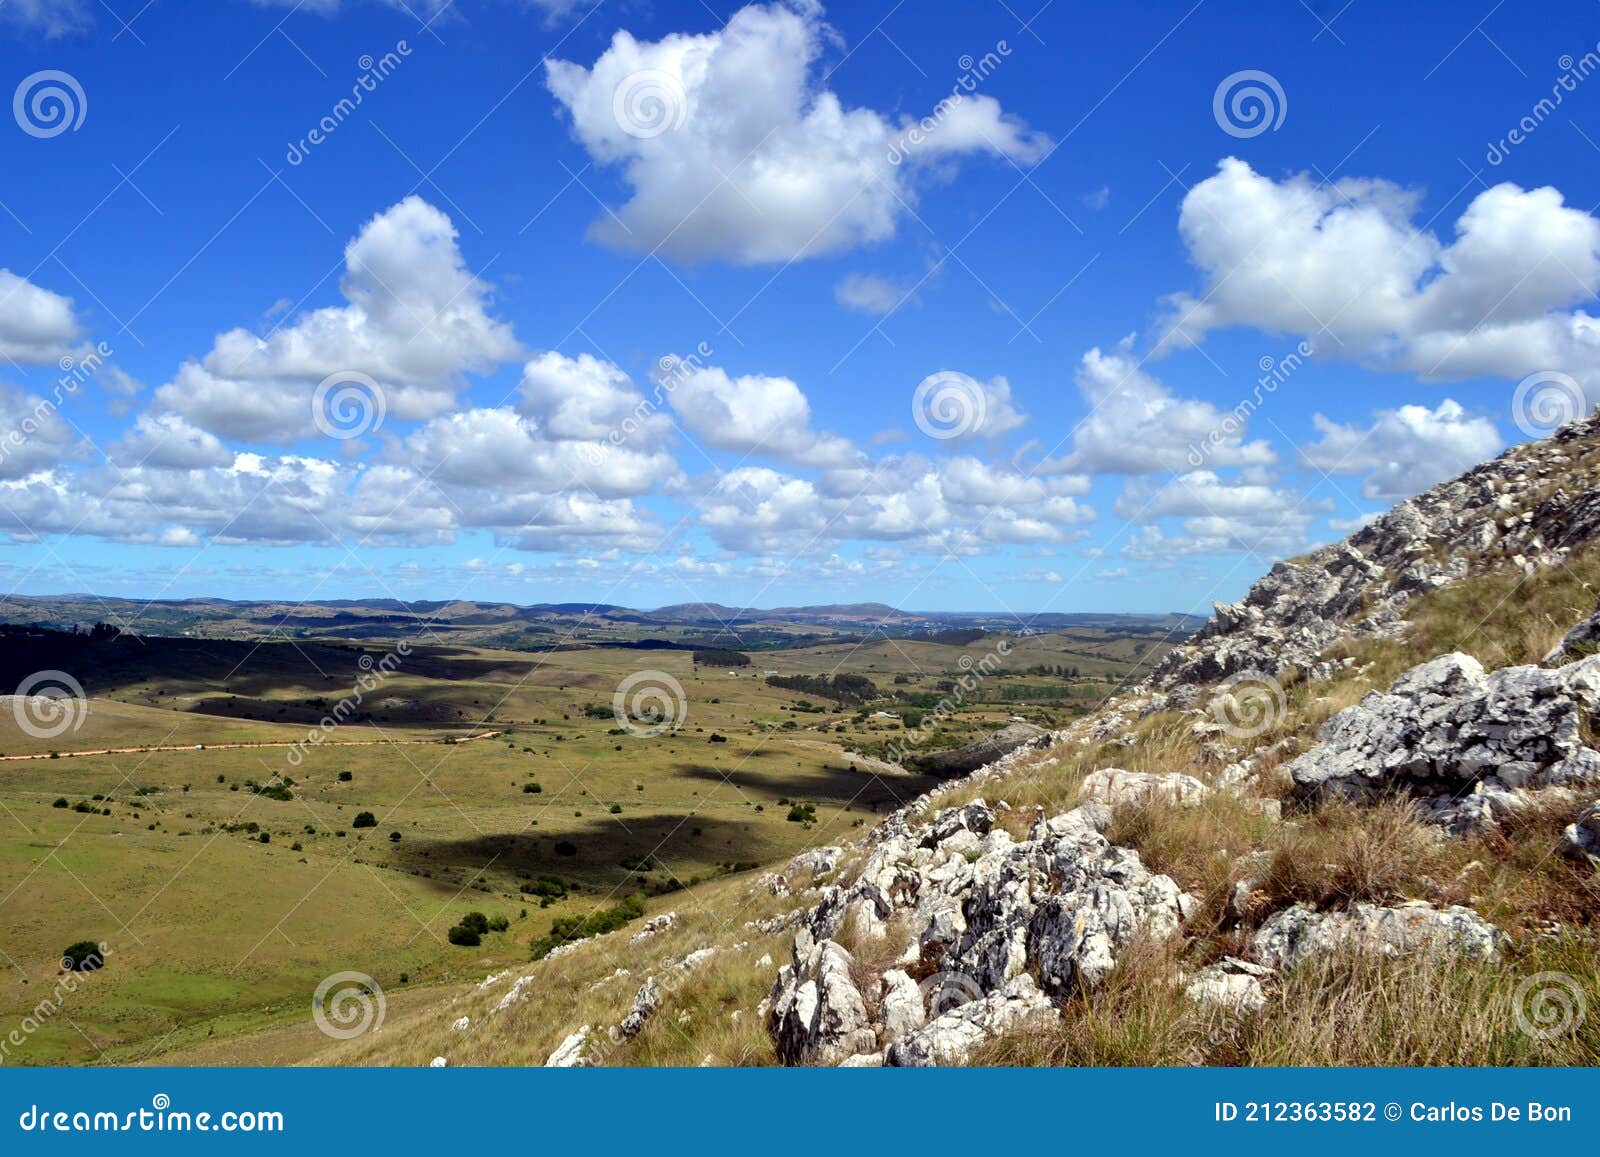 view from the rocky side of the cerro campanero en minas, lavalleja, uruguay